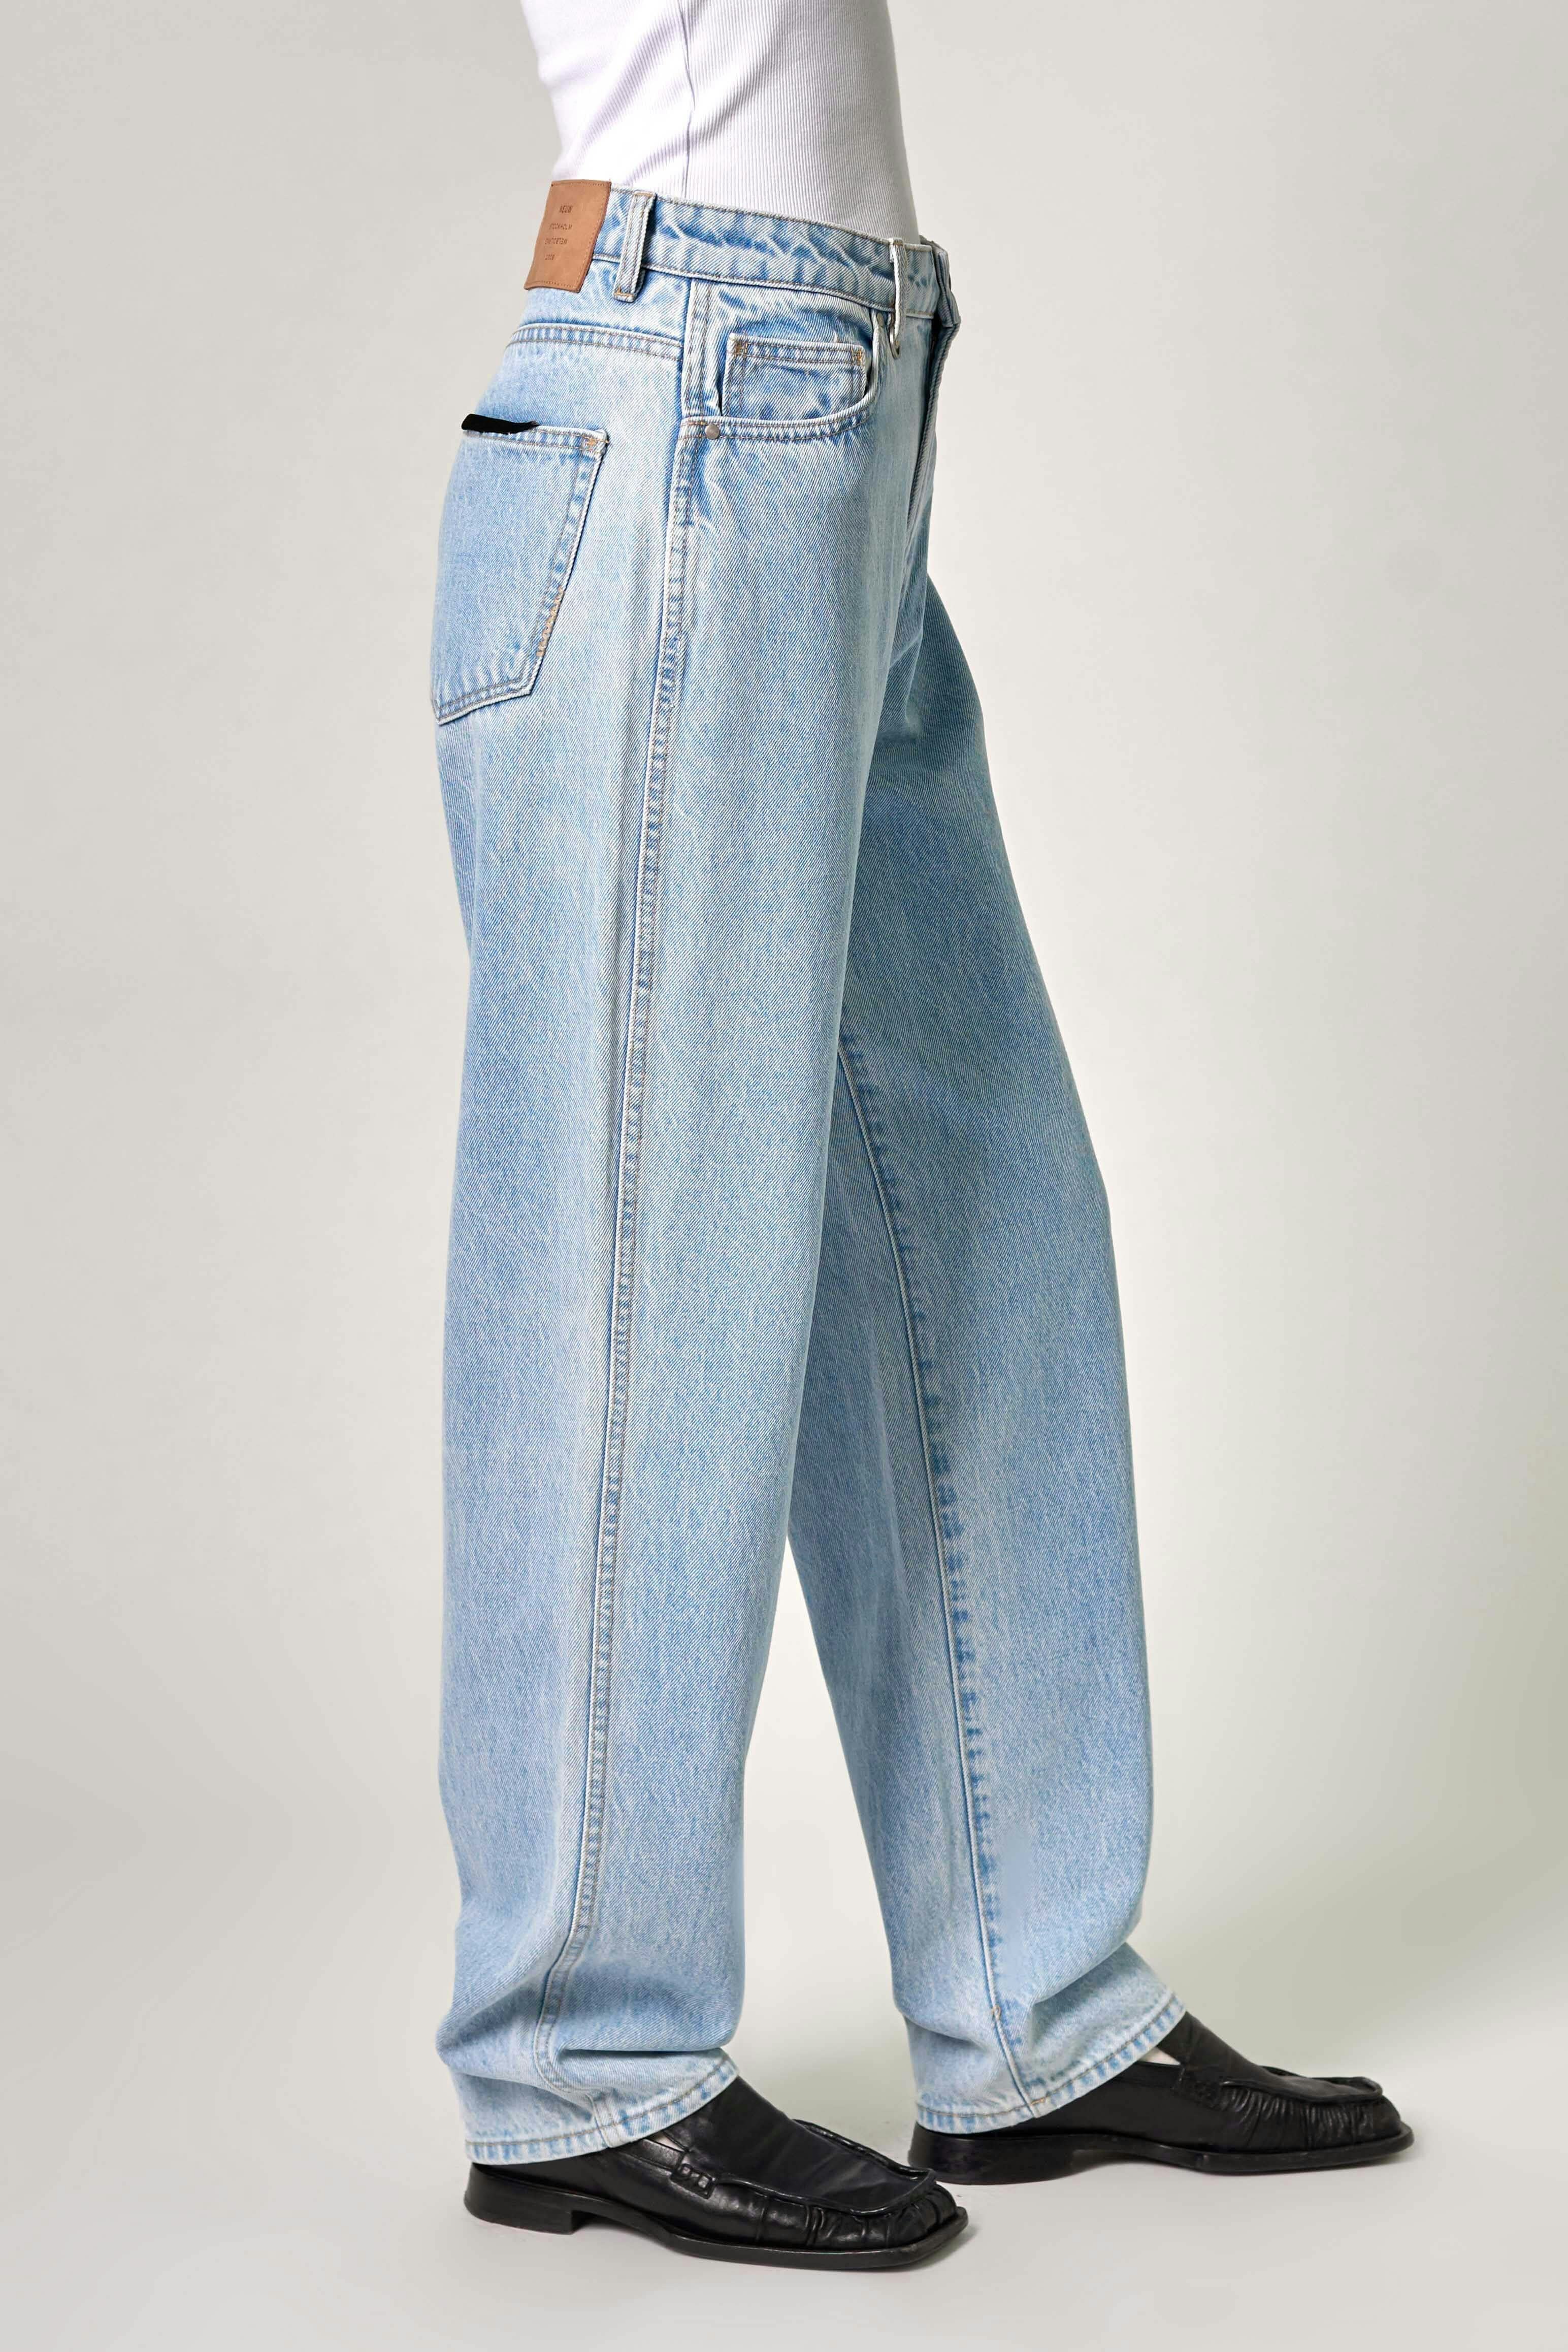 Sade Baggy - Zero Vinyl Neuw light blue womens-jeans 